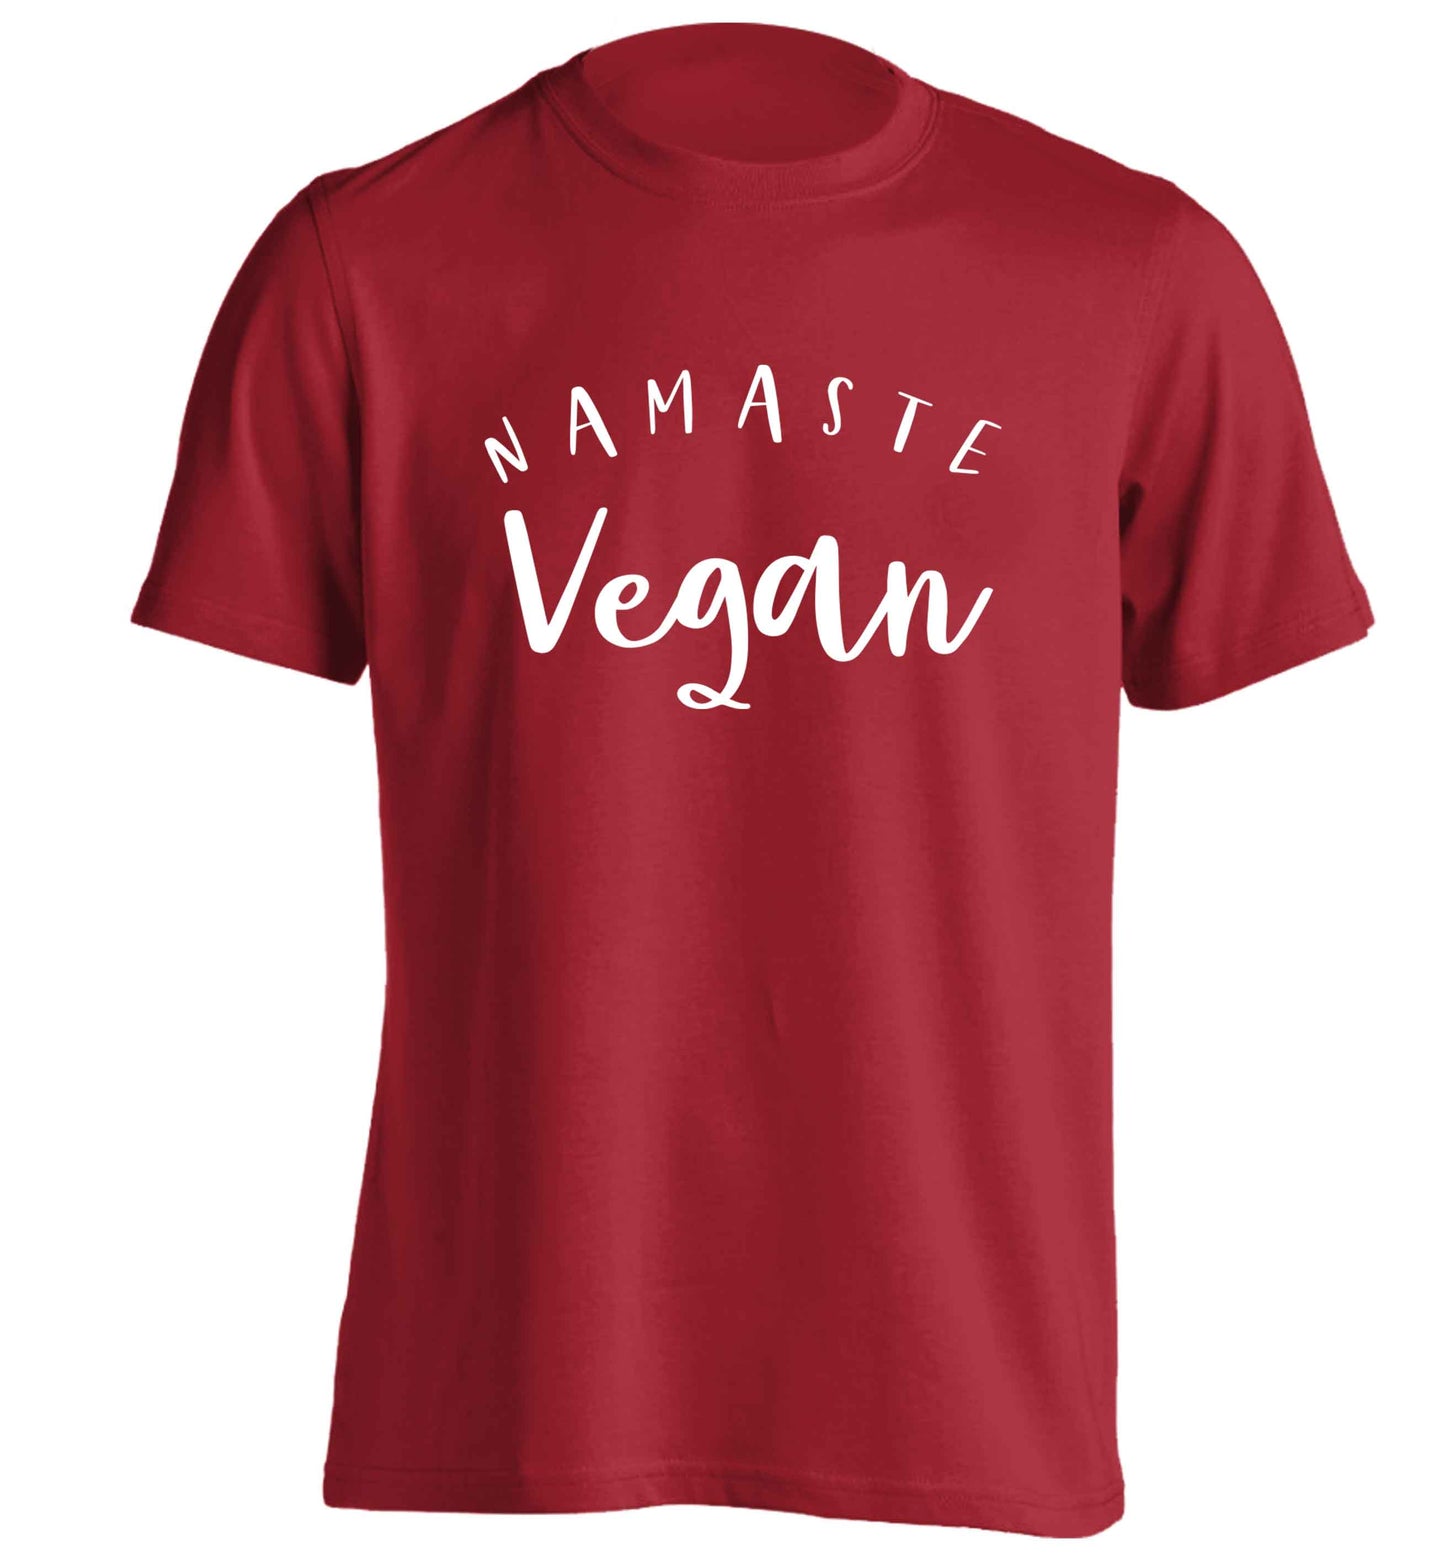 Namaste vegan adults unisex red Tshirt 2XL